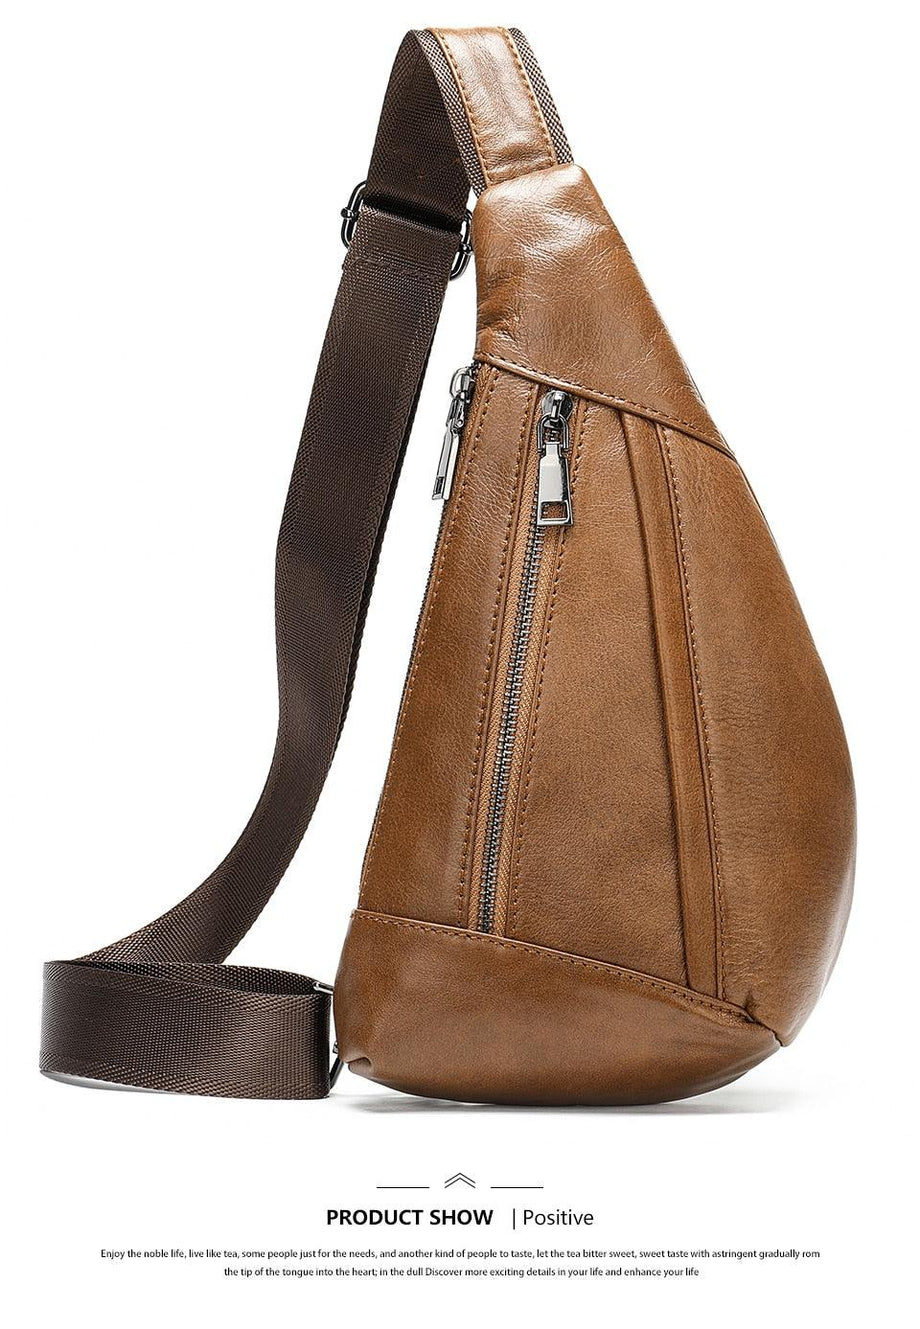 Genuine Brown Mens Leather Sling Bag